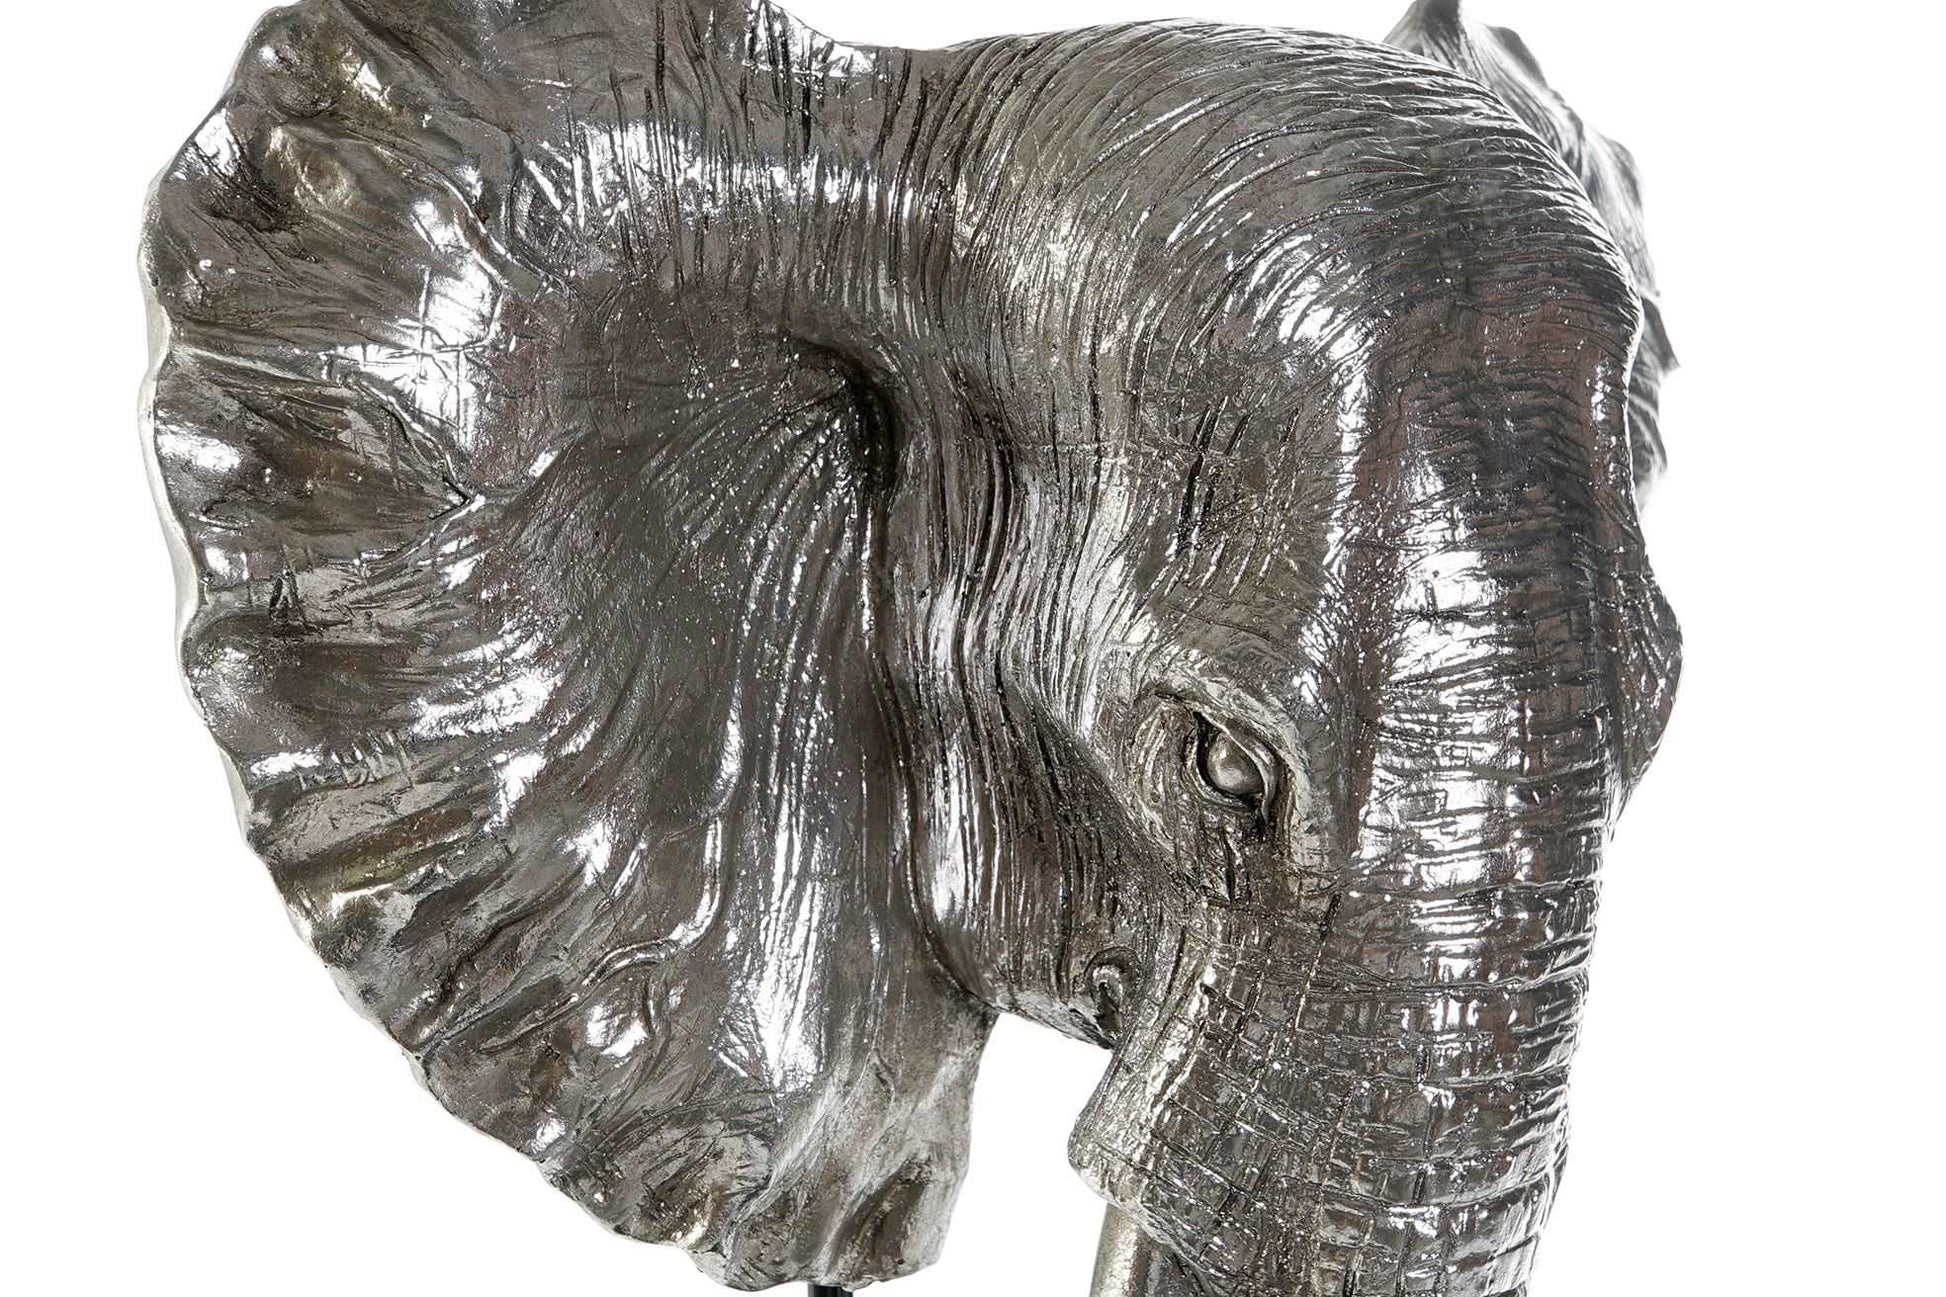 Figura resina mdf Elefante plateado